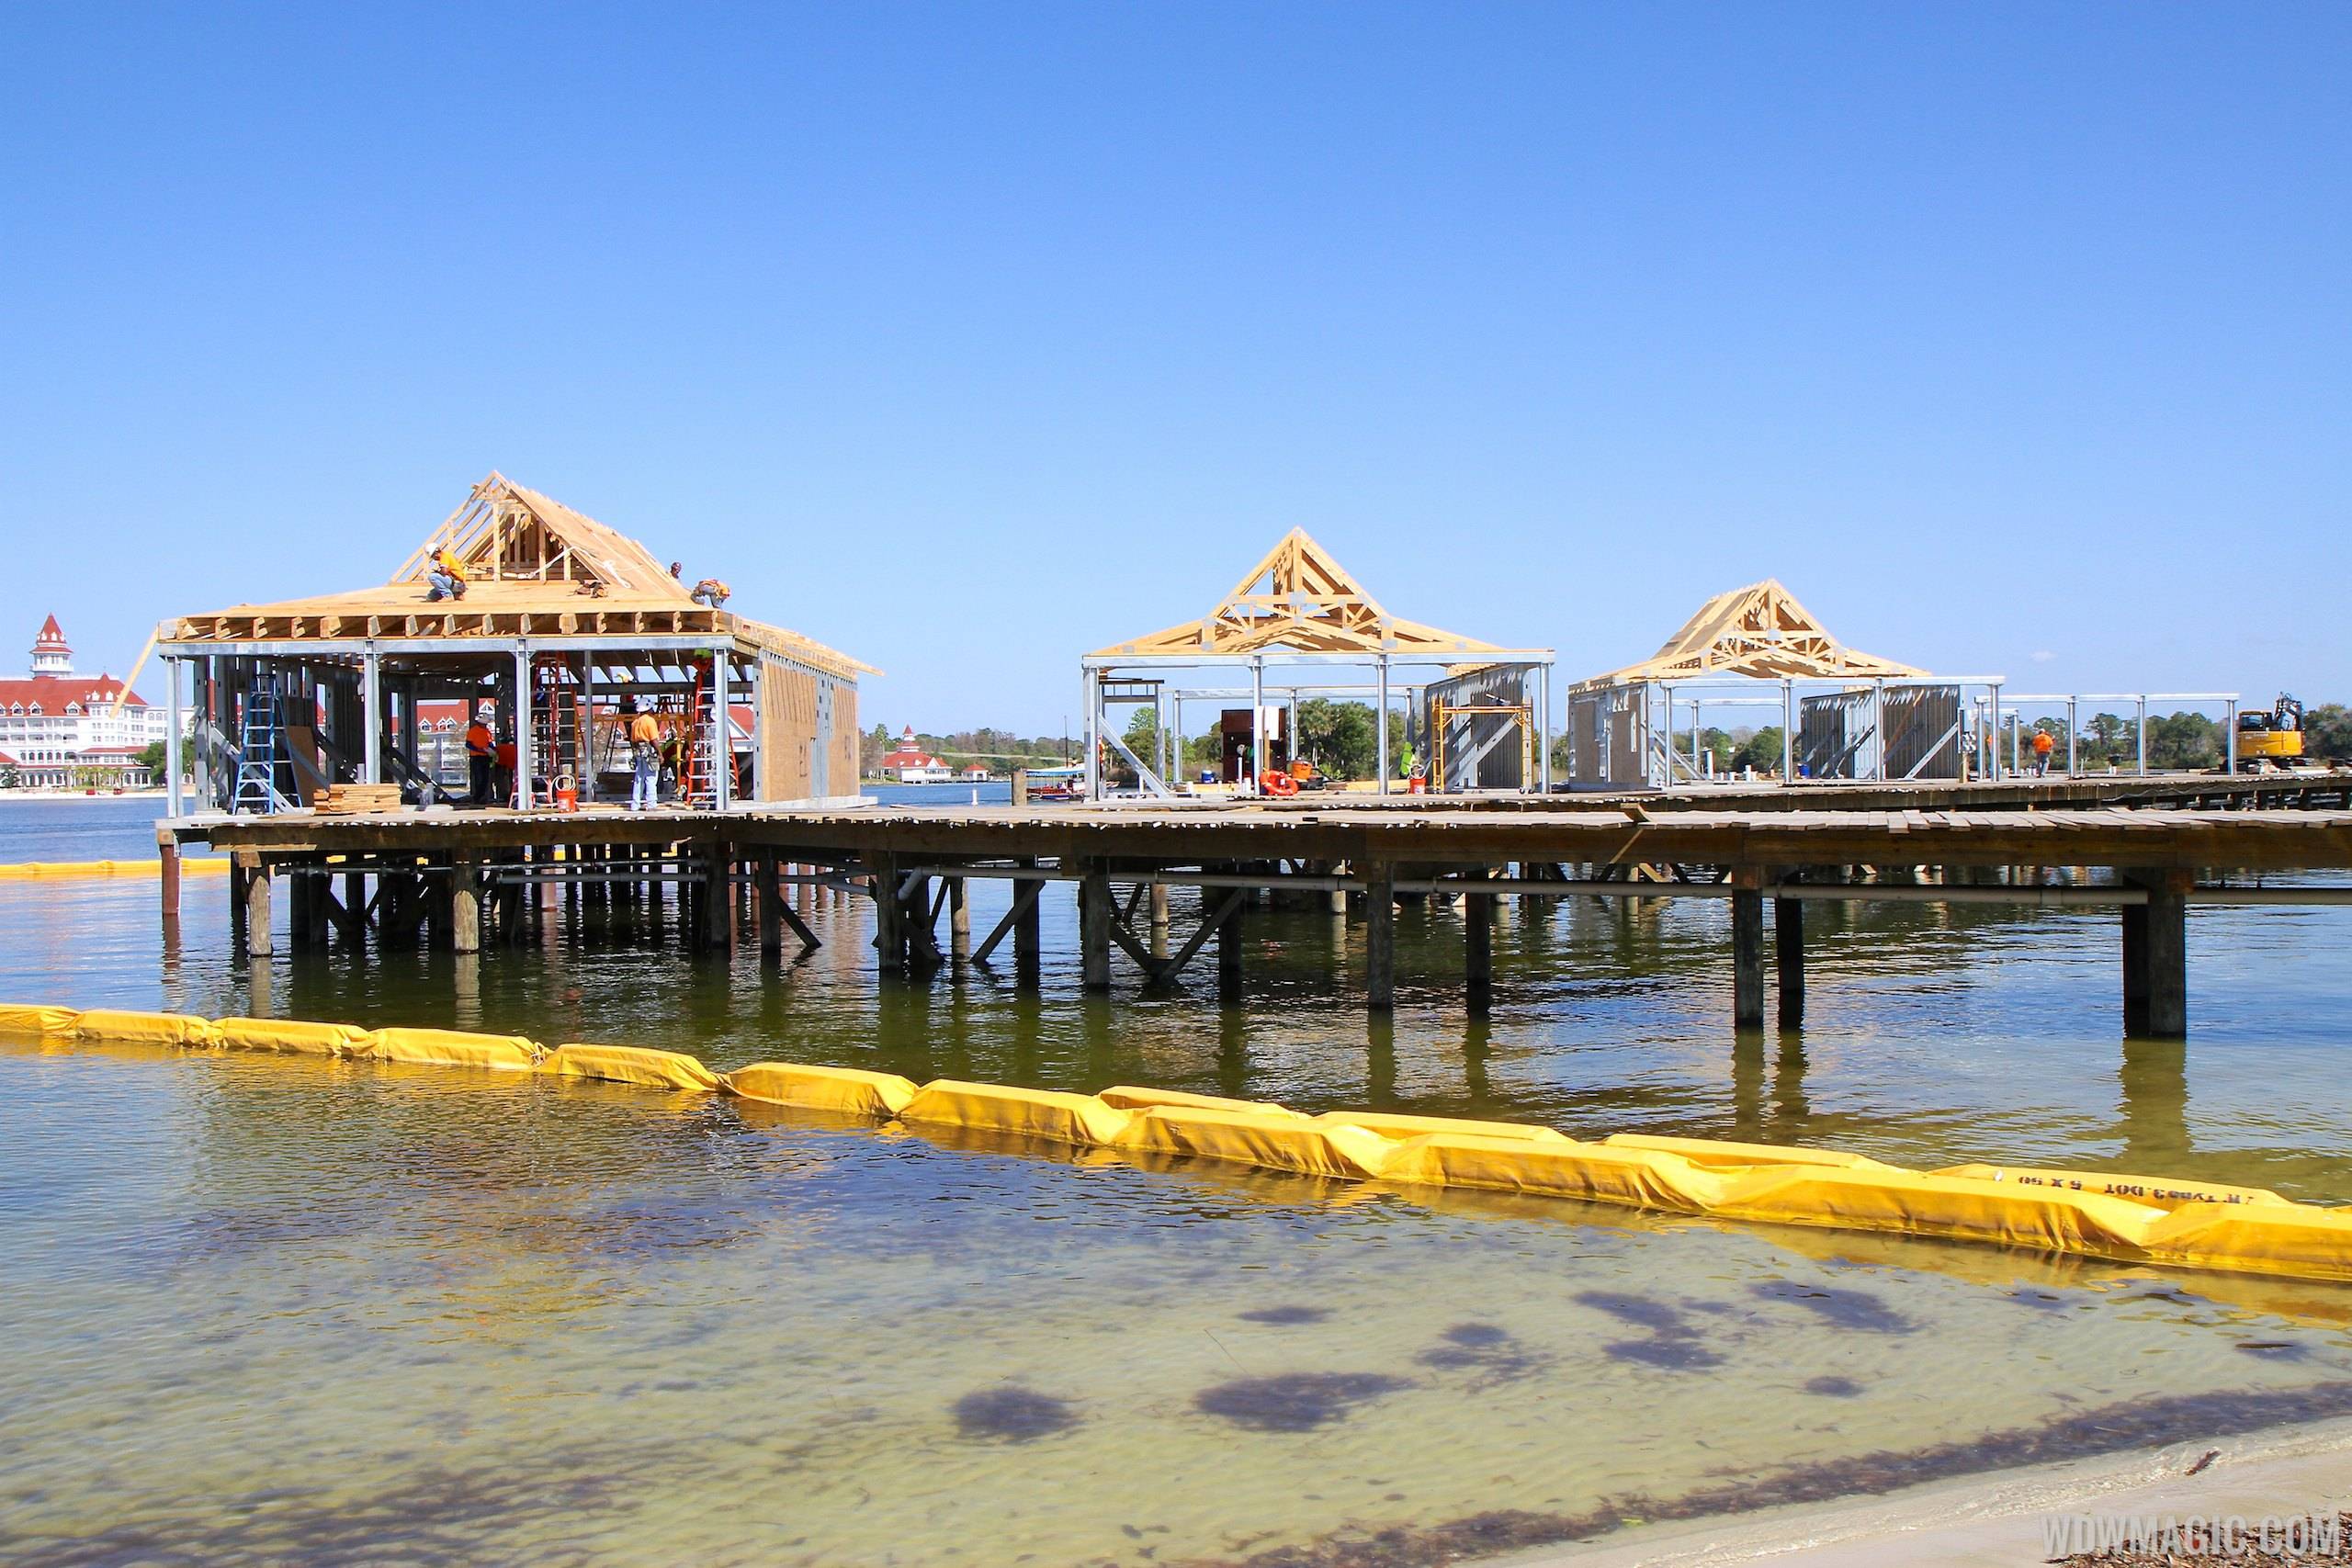 PHOTOS - Latest look at the DVC lagoon villas at the Polynesian Resort